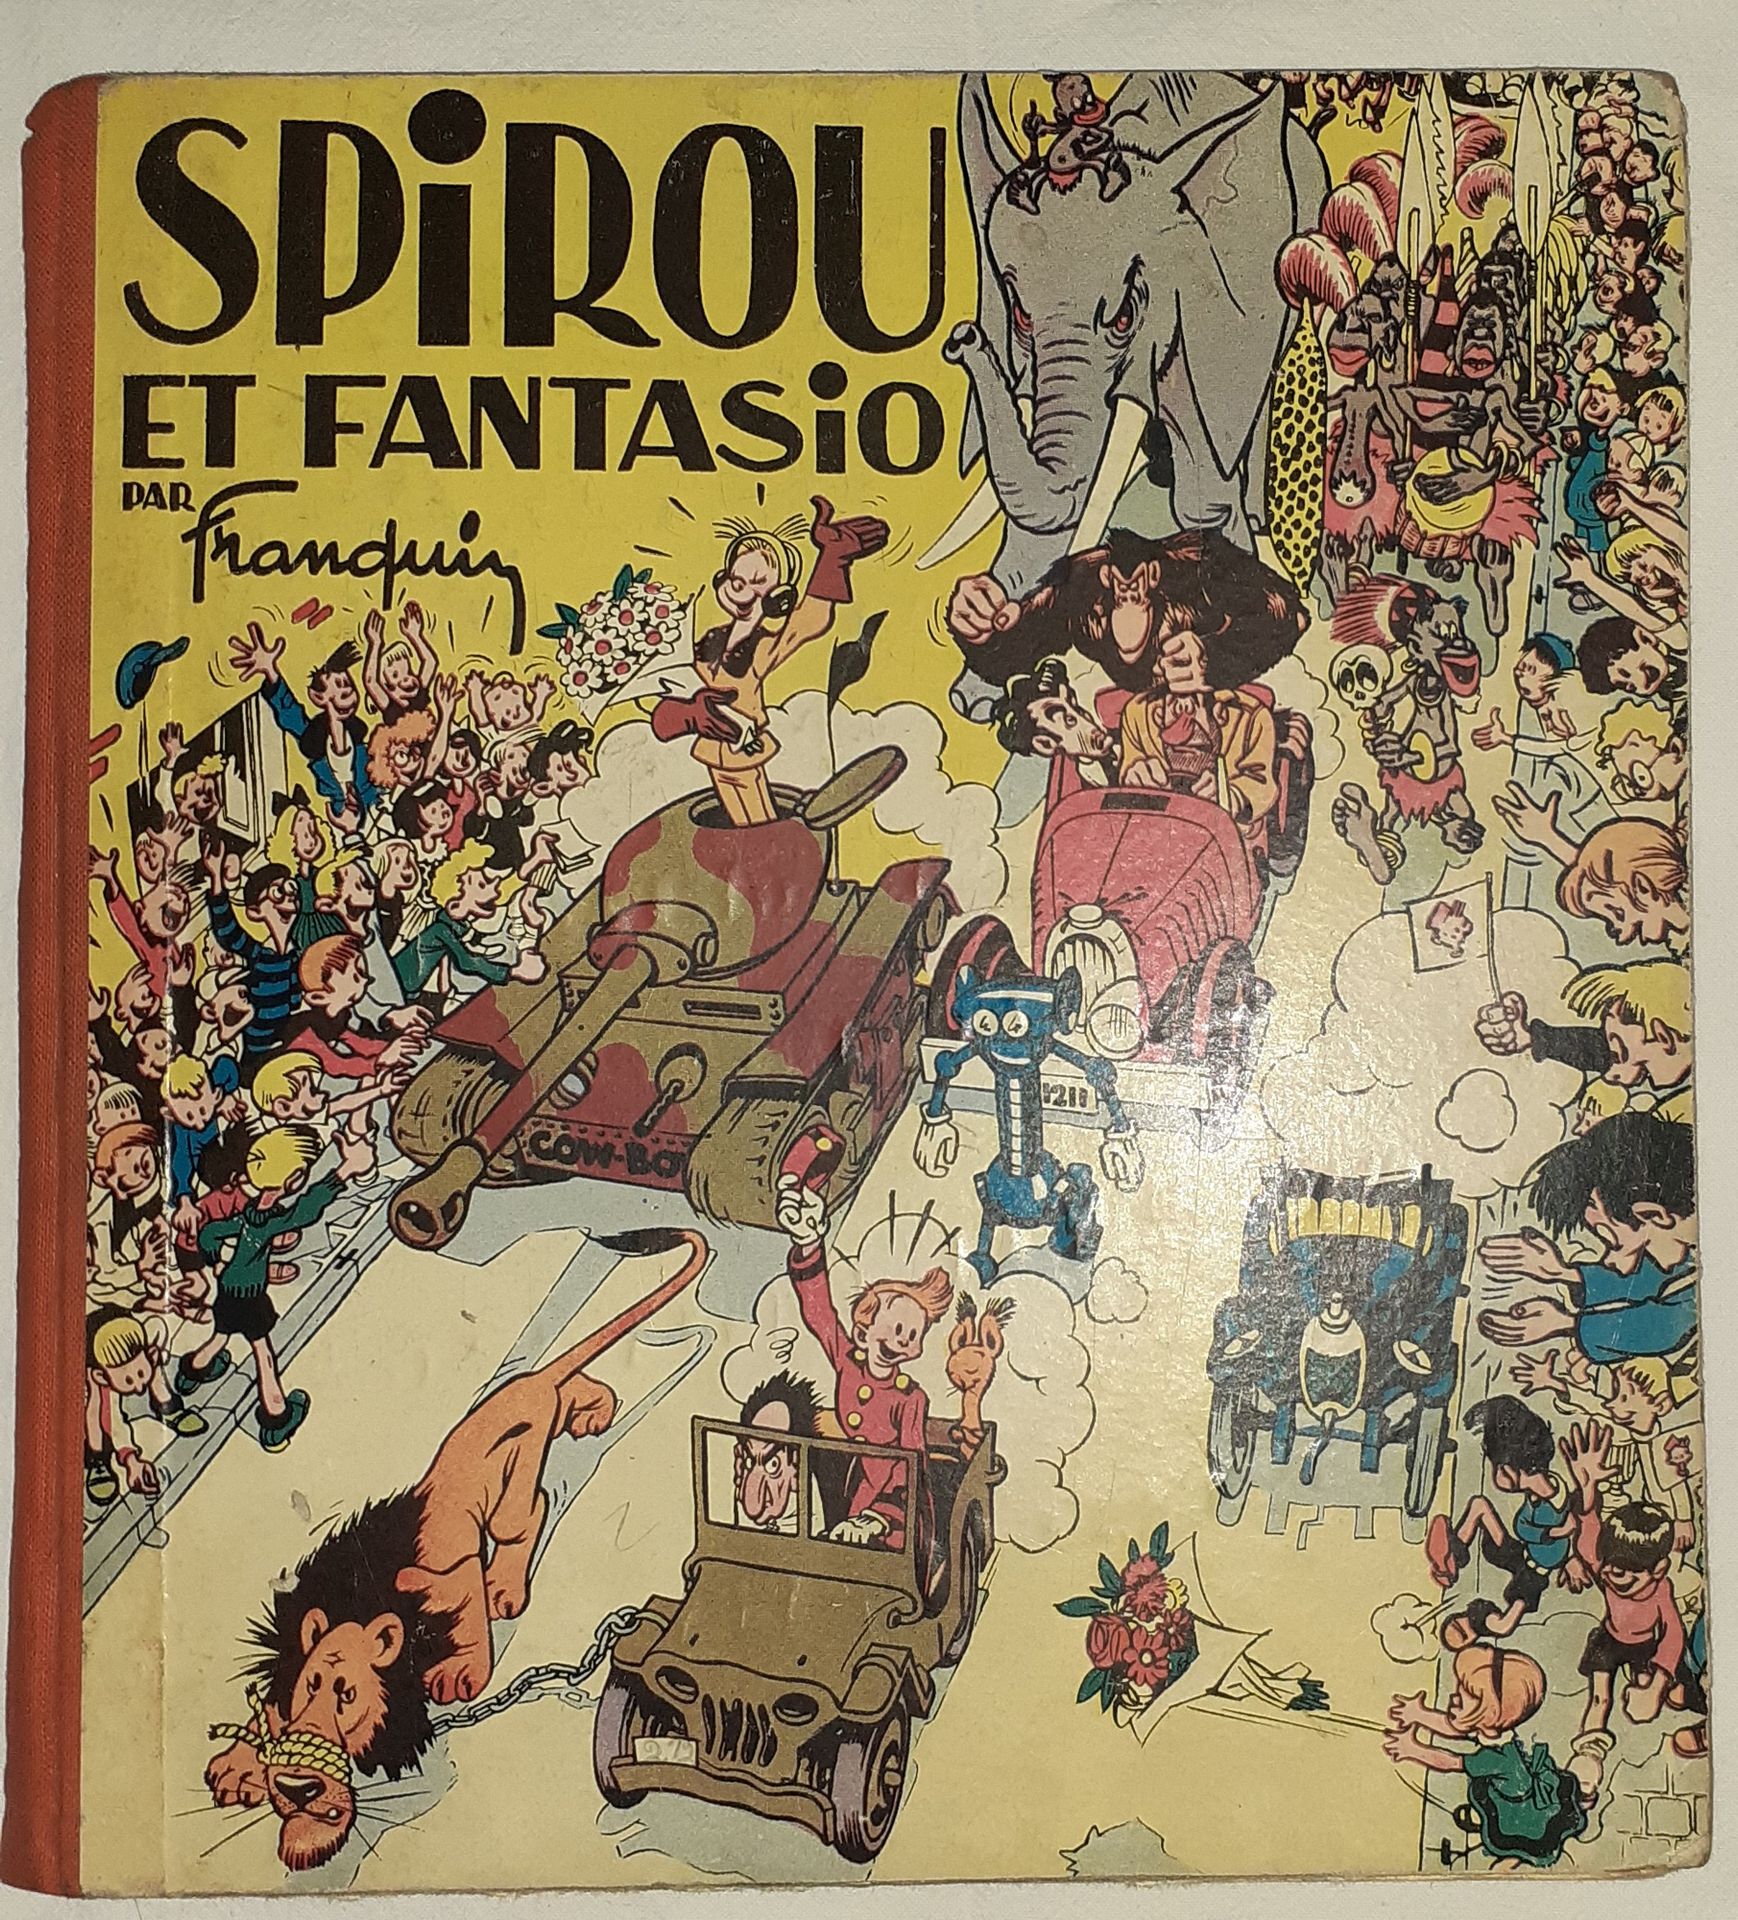 Null Spirou et Fantasio : Franquin著。橙色布背相册。扉页的折页处有粘纸。第一版，状况非常好。